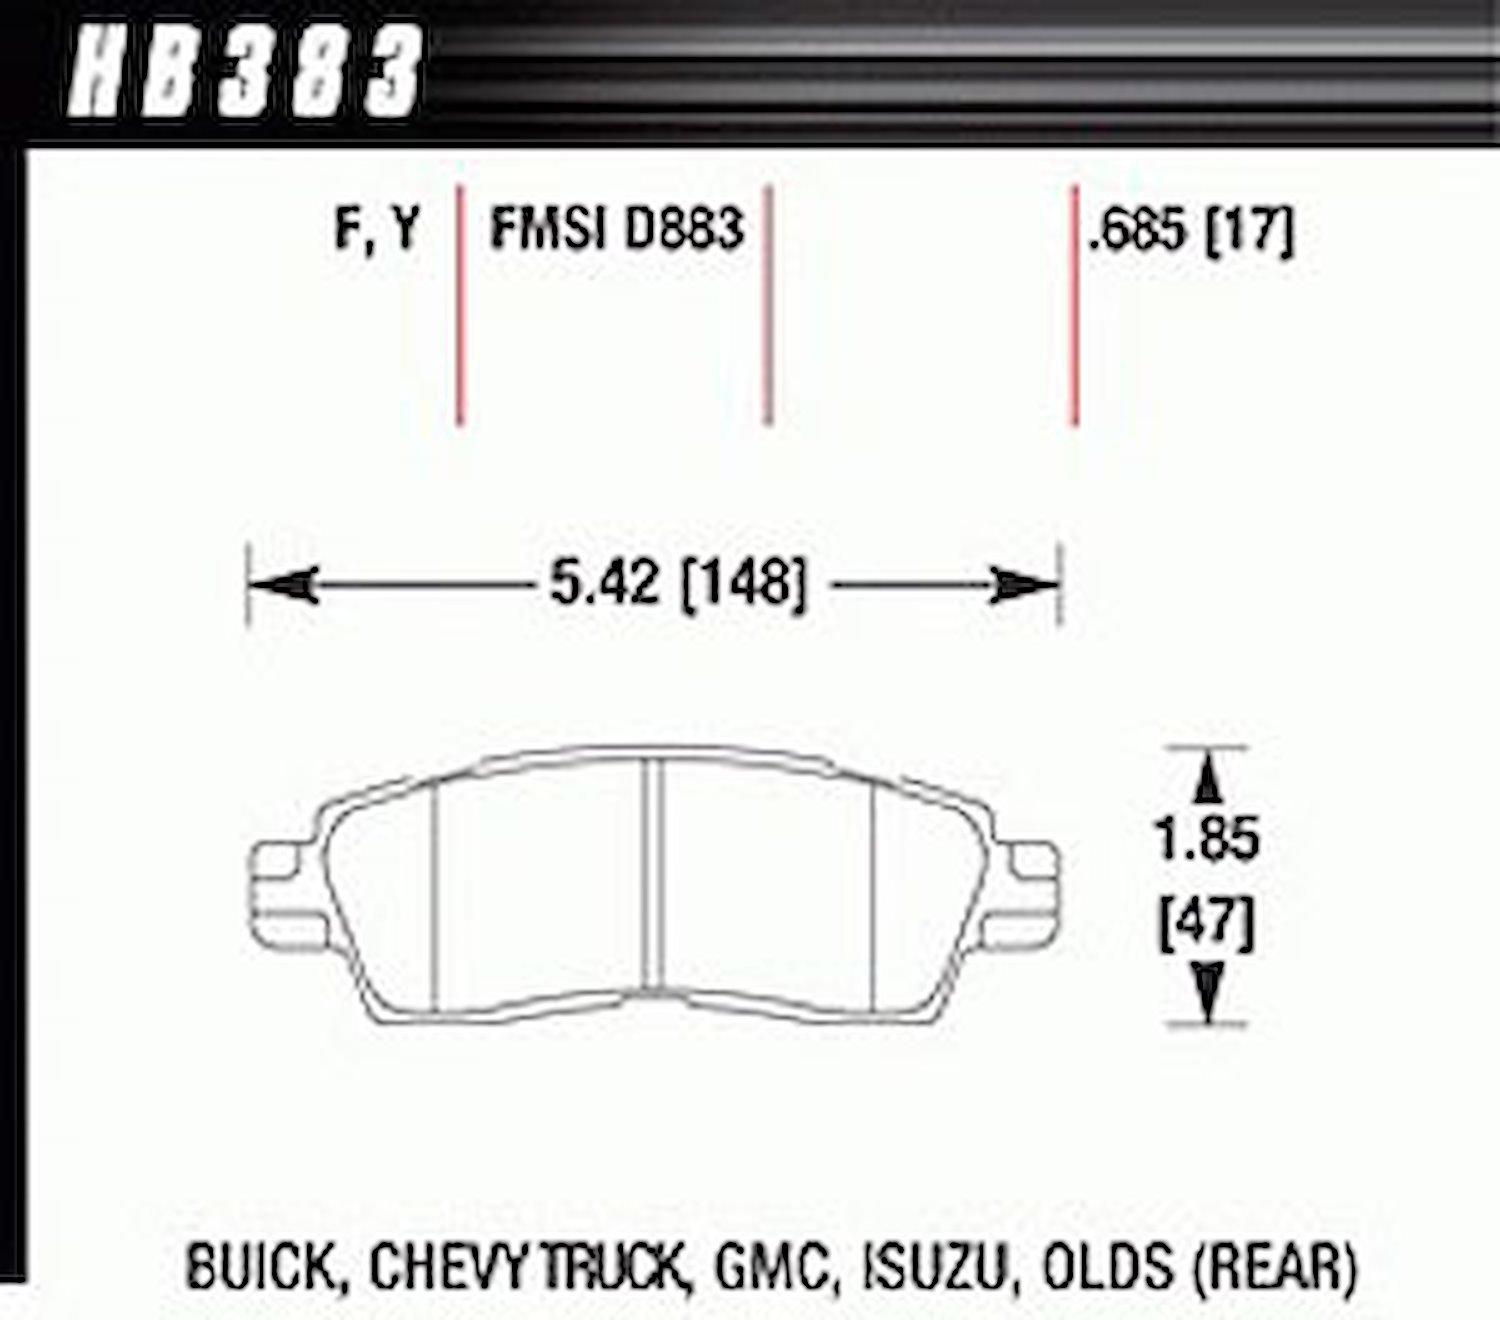 GM/Isuzu/Saab Rear Brake Pads